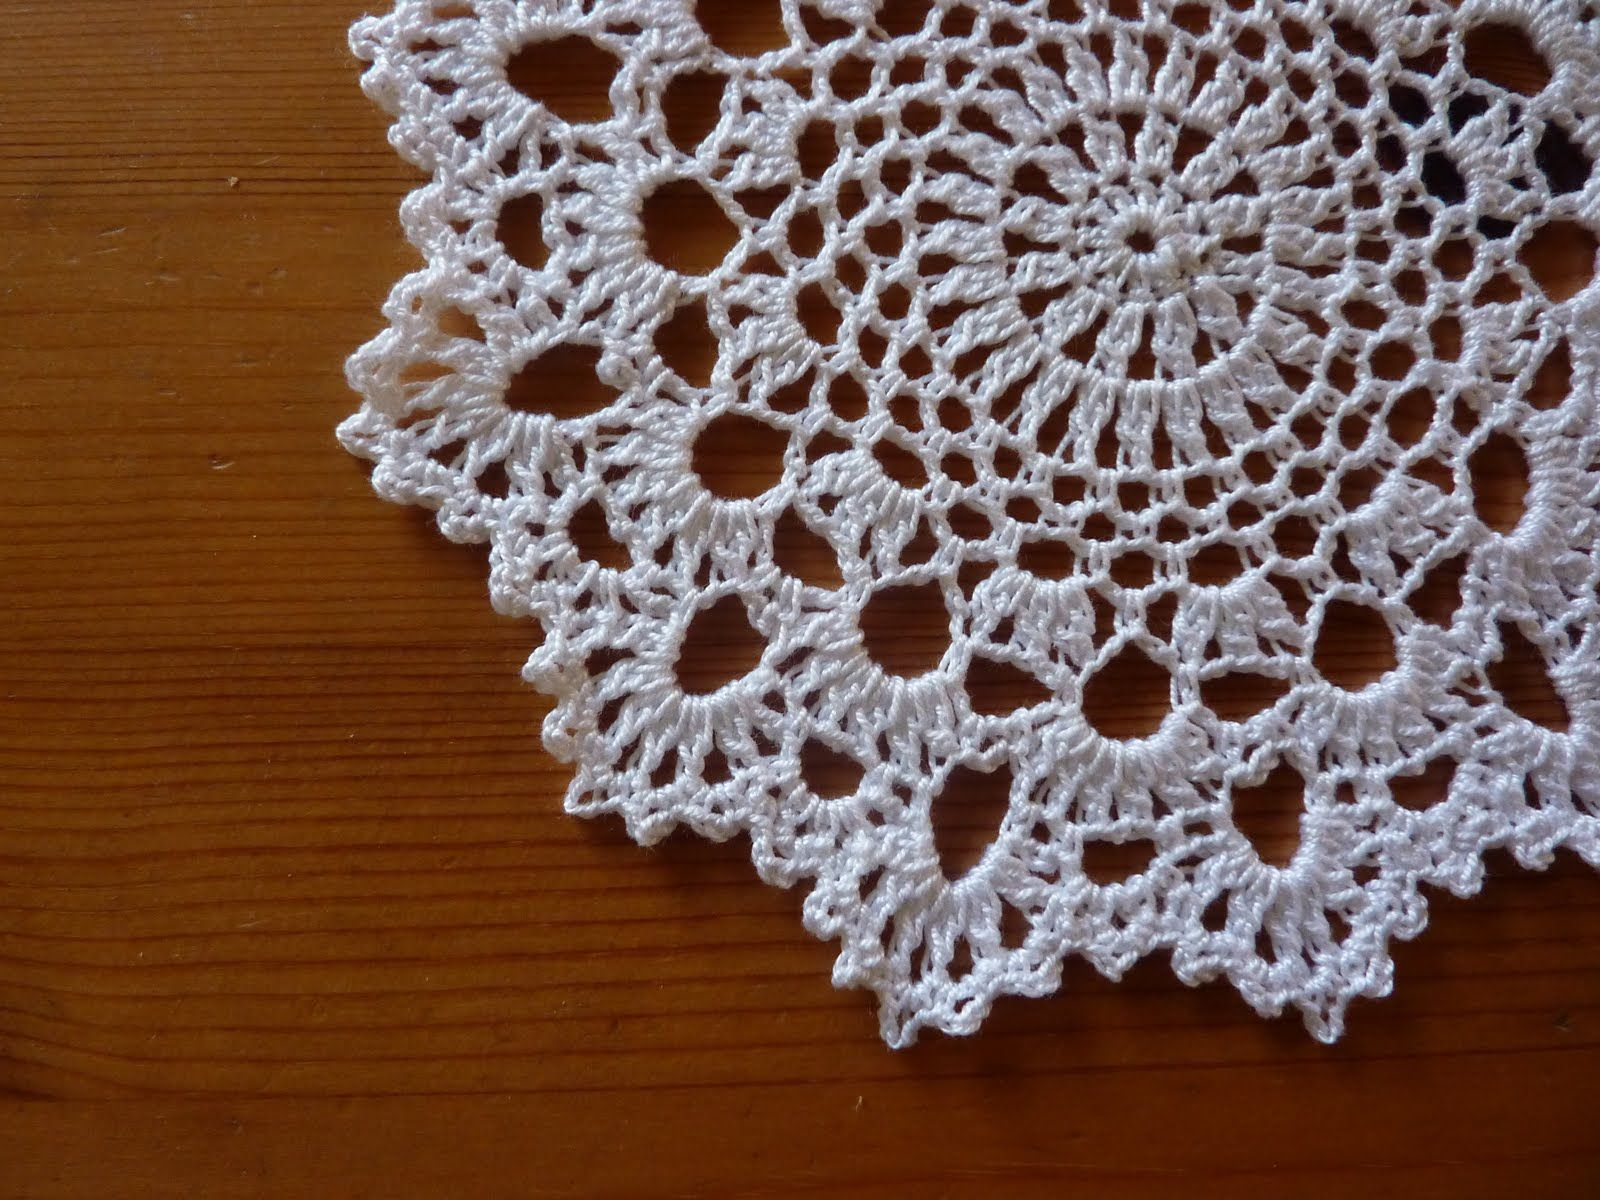 Easy Crochet Doily Patterns For Beginners Easy Crochet Doily For Beginners Very Pretty And So Easy To Make